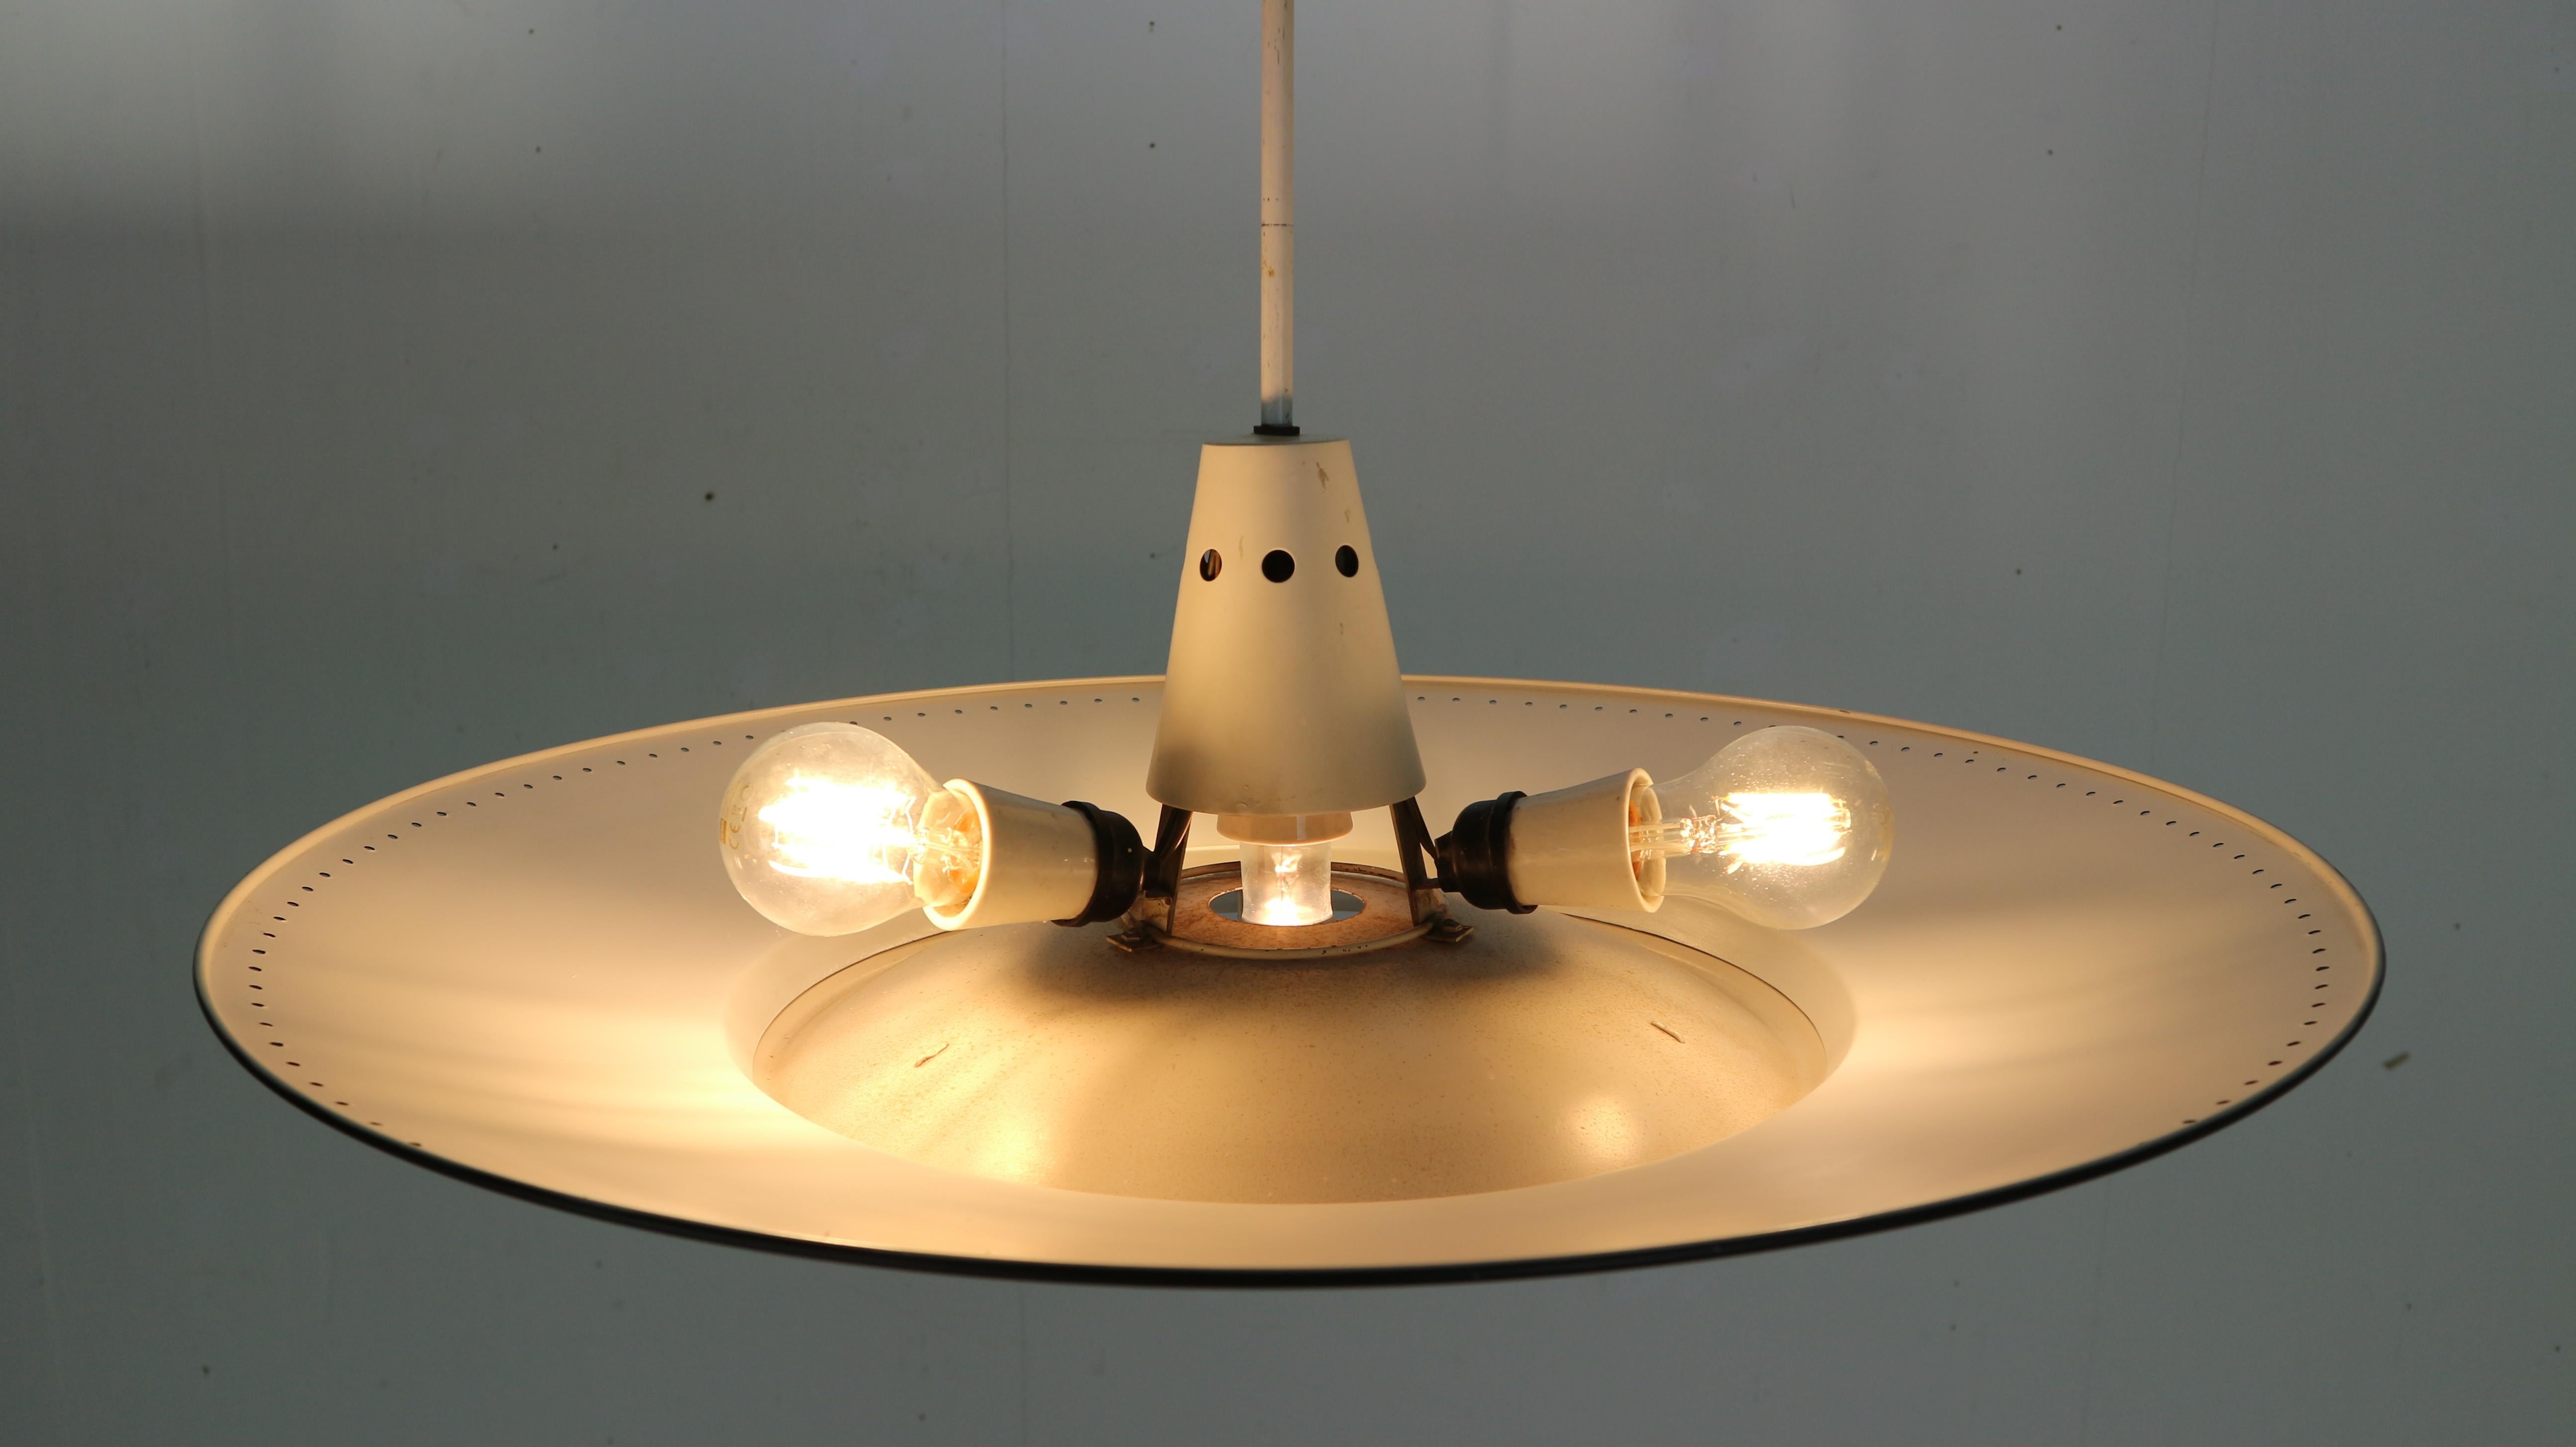 Enameled Louis Kalff for Philips Industrial Ceiling Lamp, Dutch Design, 1950